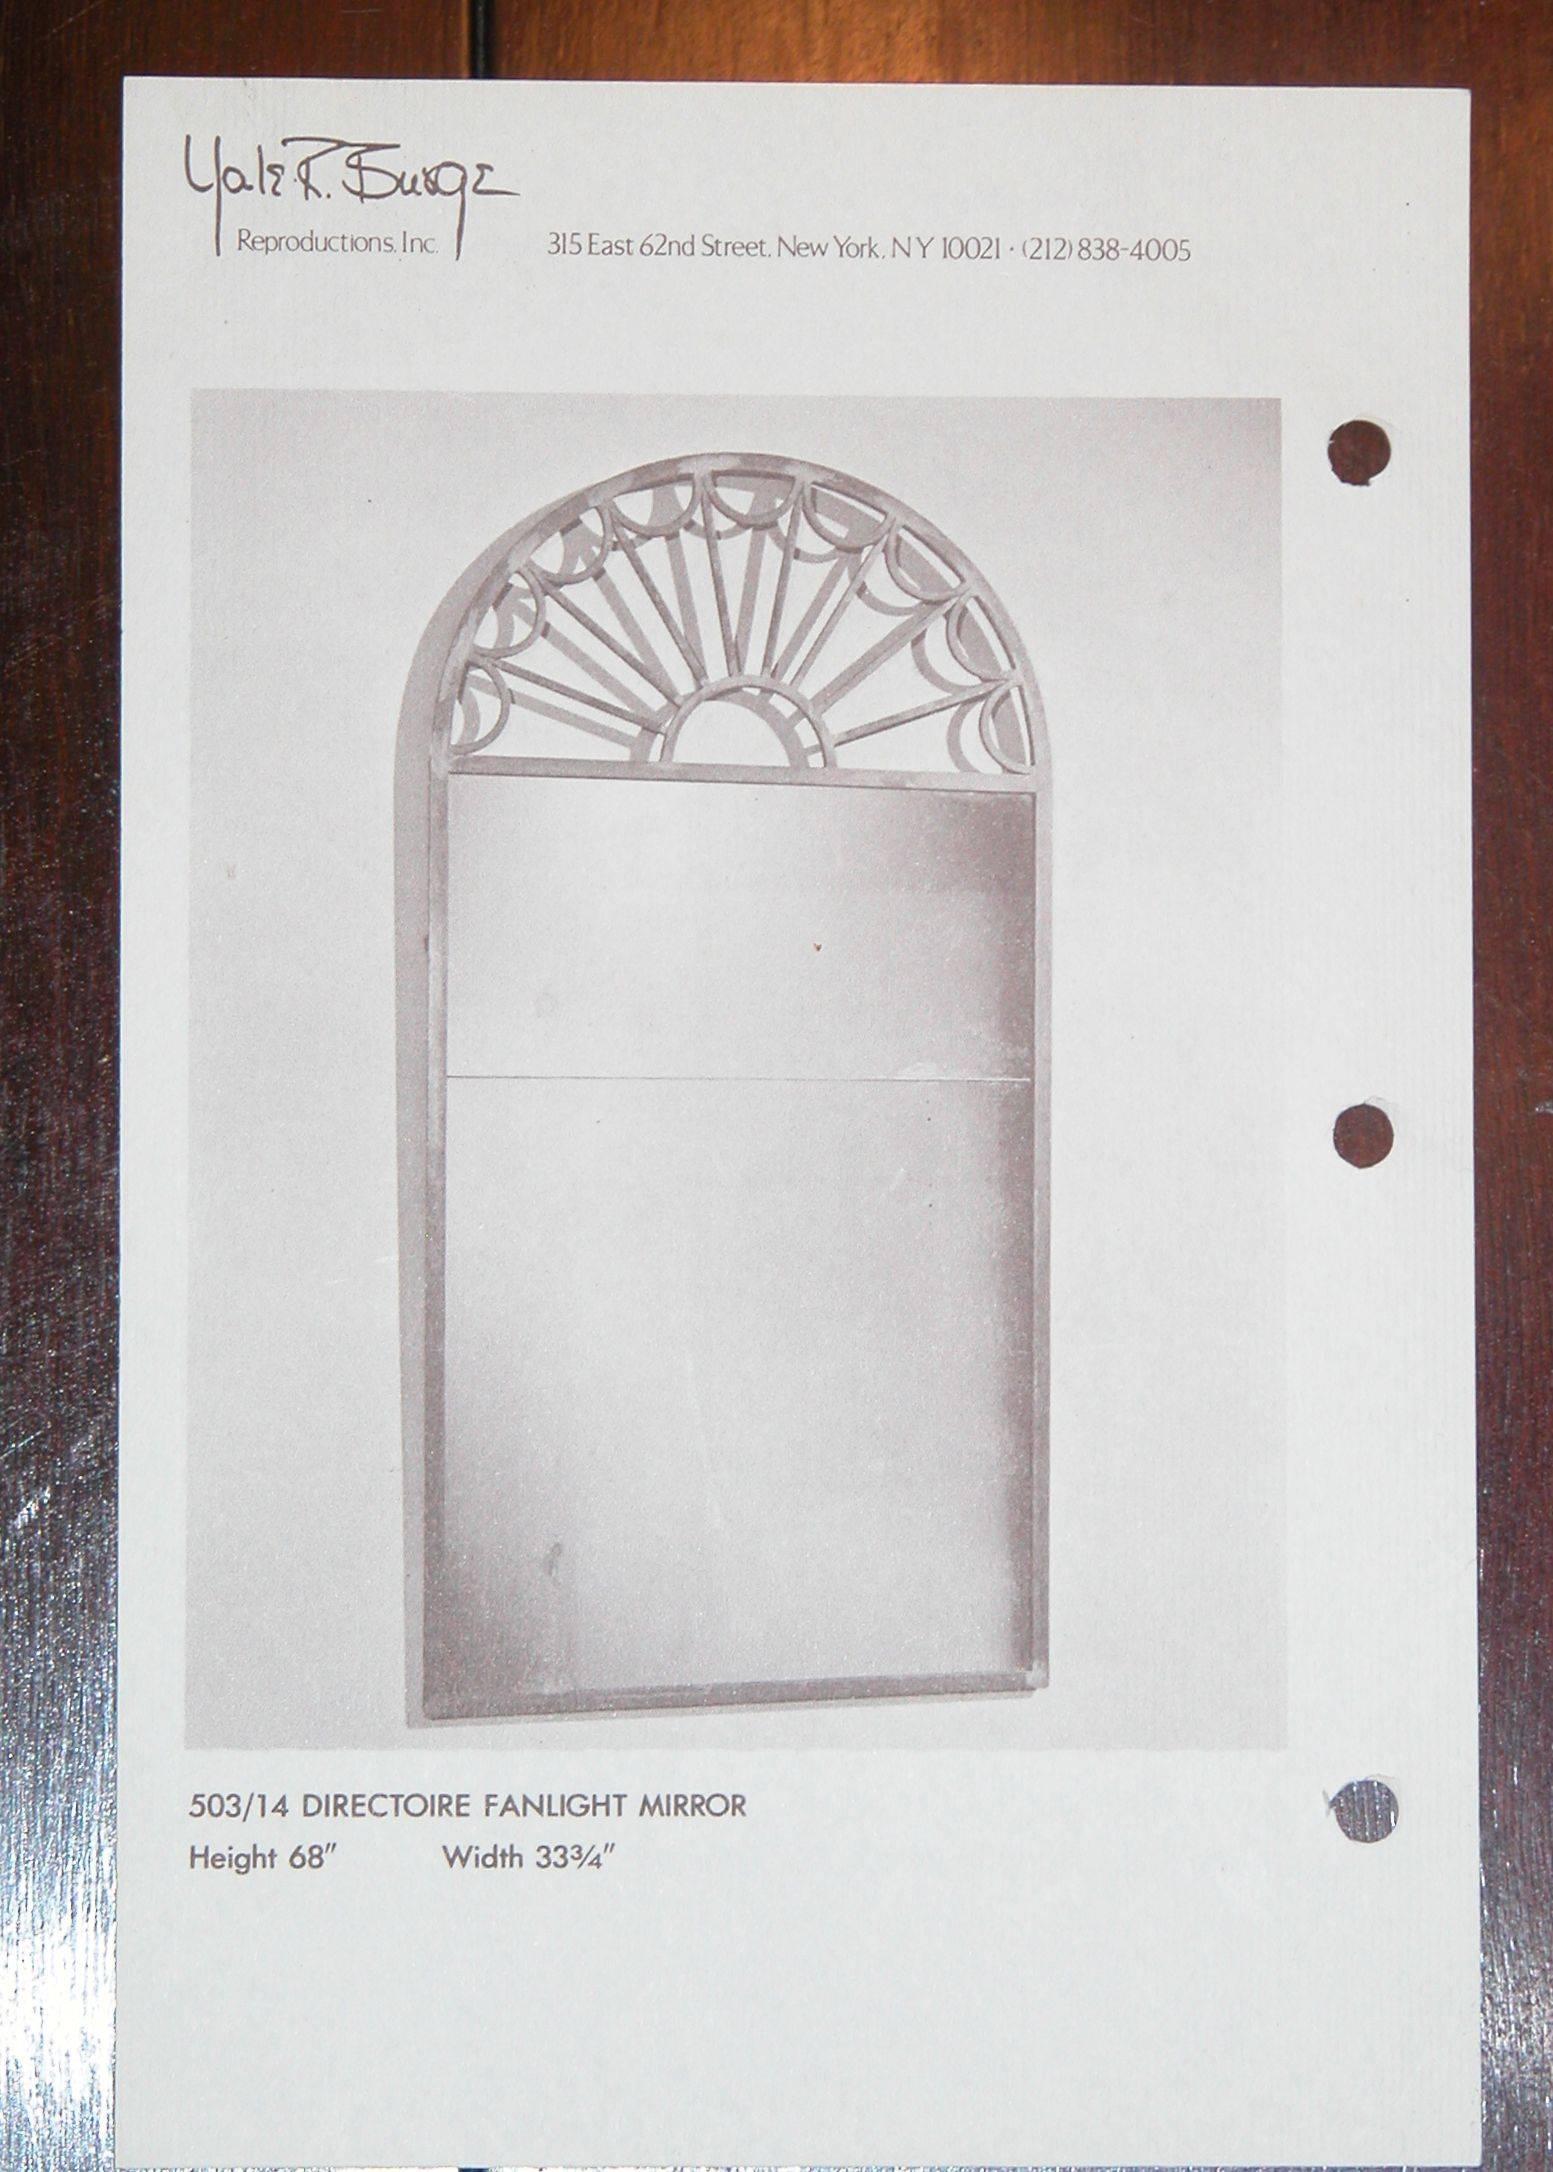 American Original Yale R. Burge Wall Hung Iron Fanlight Style Mirror, 1983